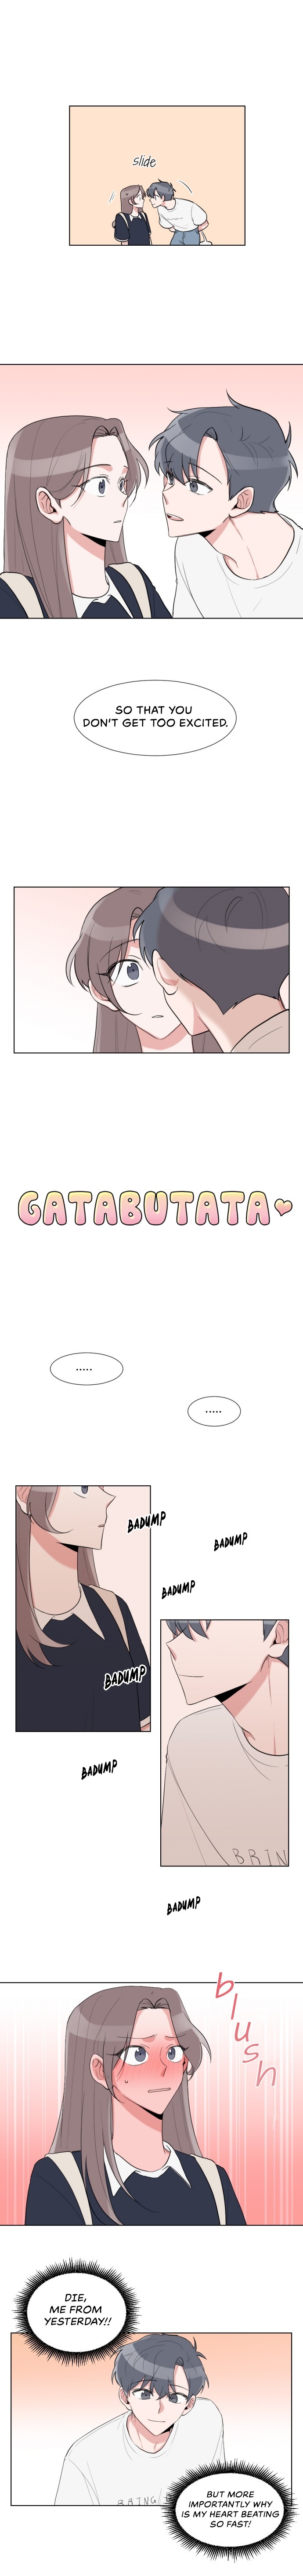 Gatabutata - Chapter 25 Page 2